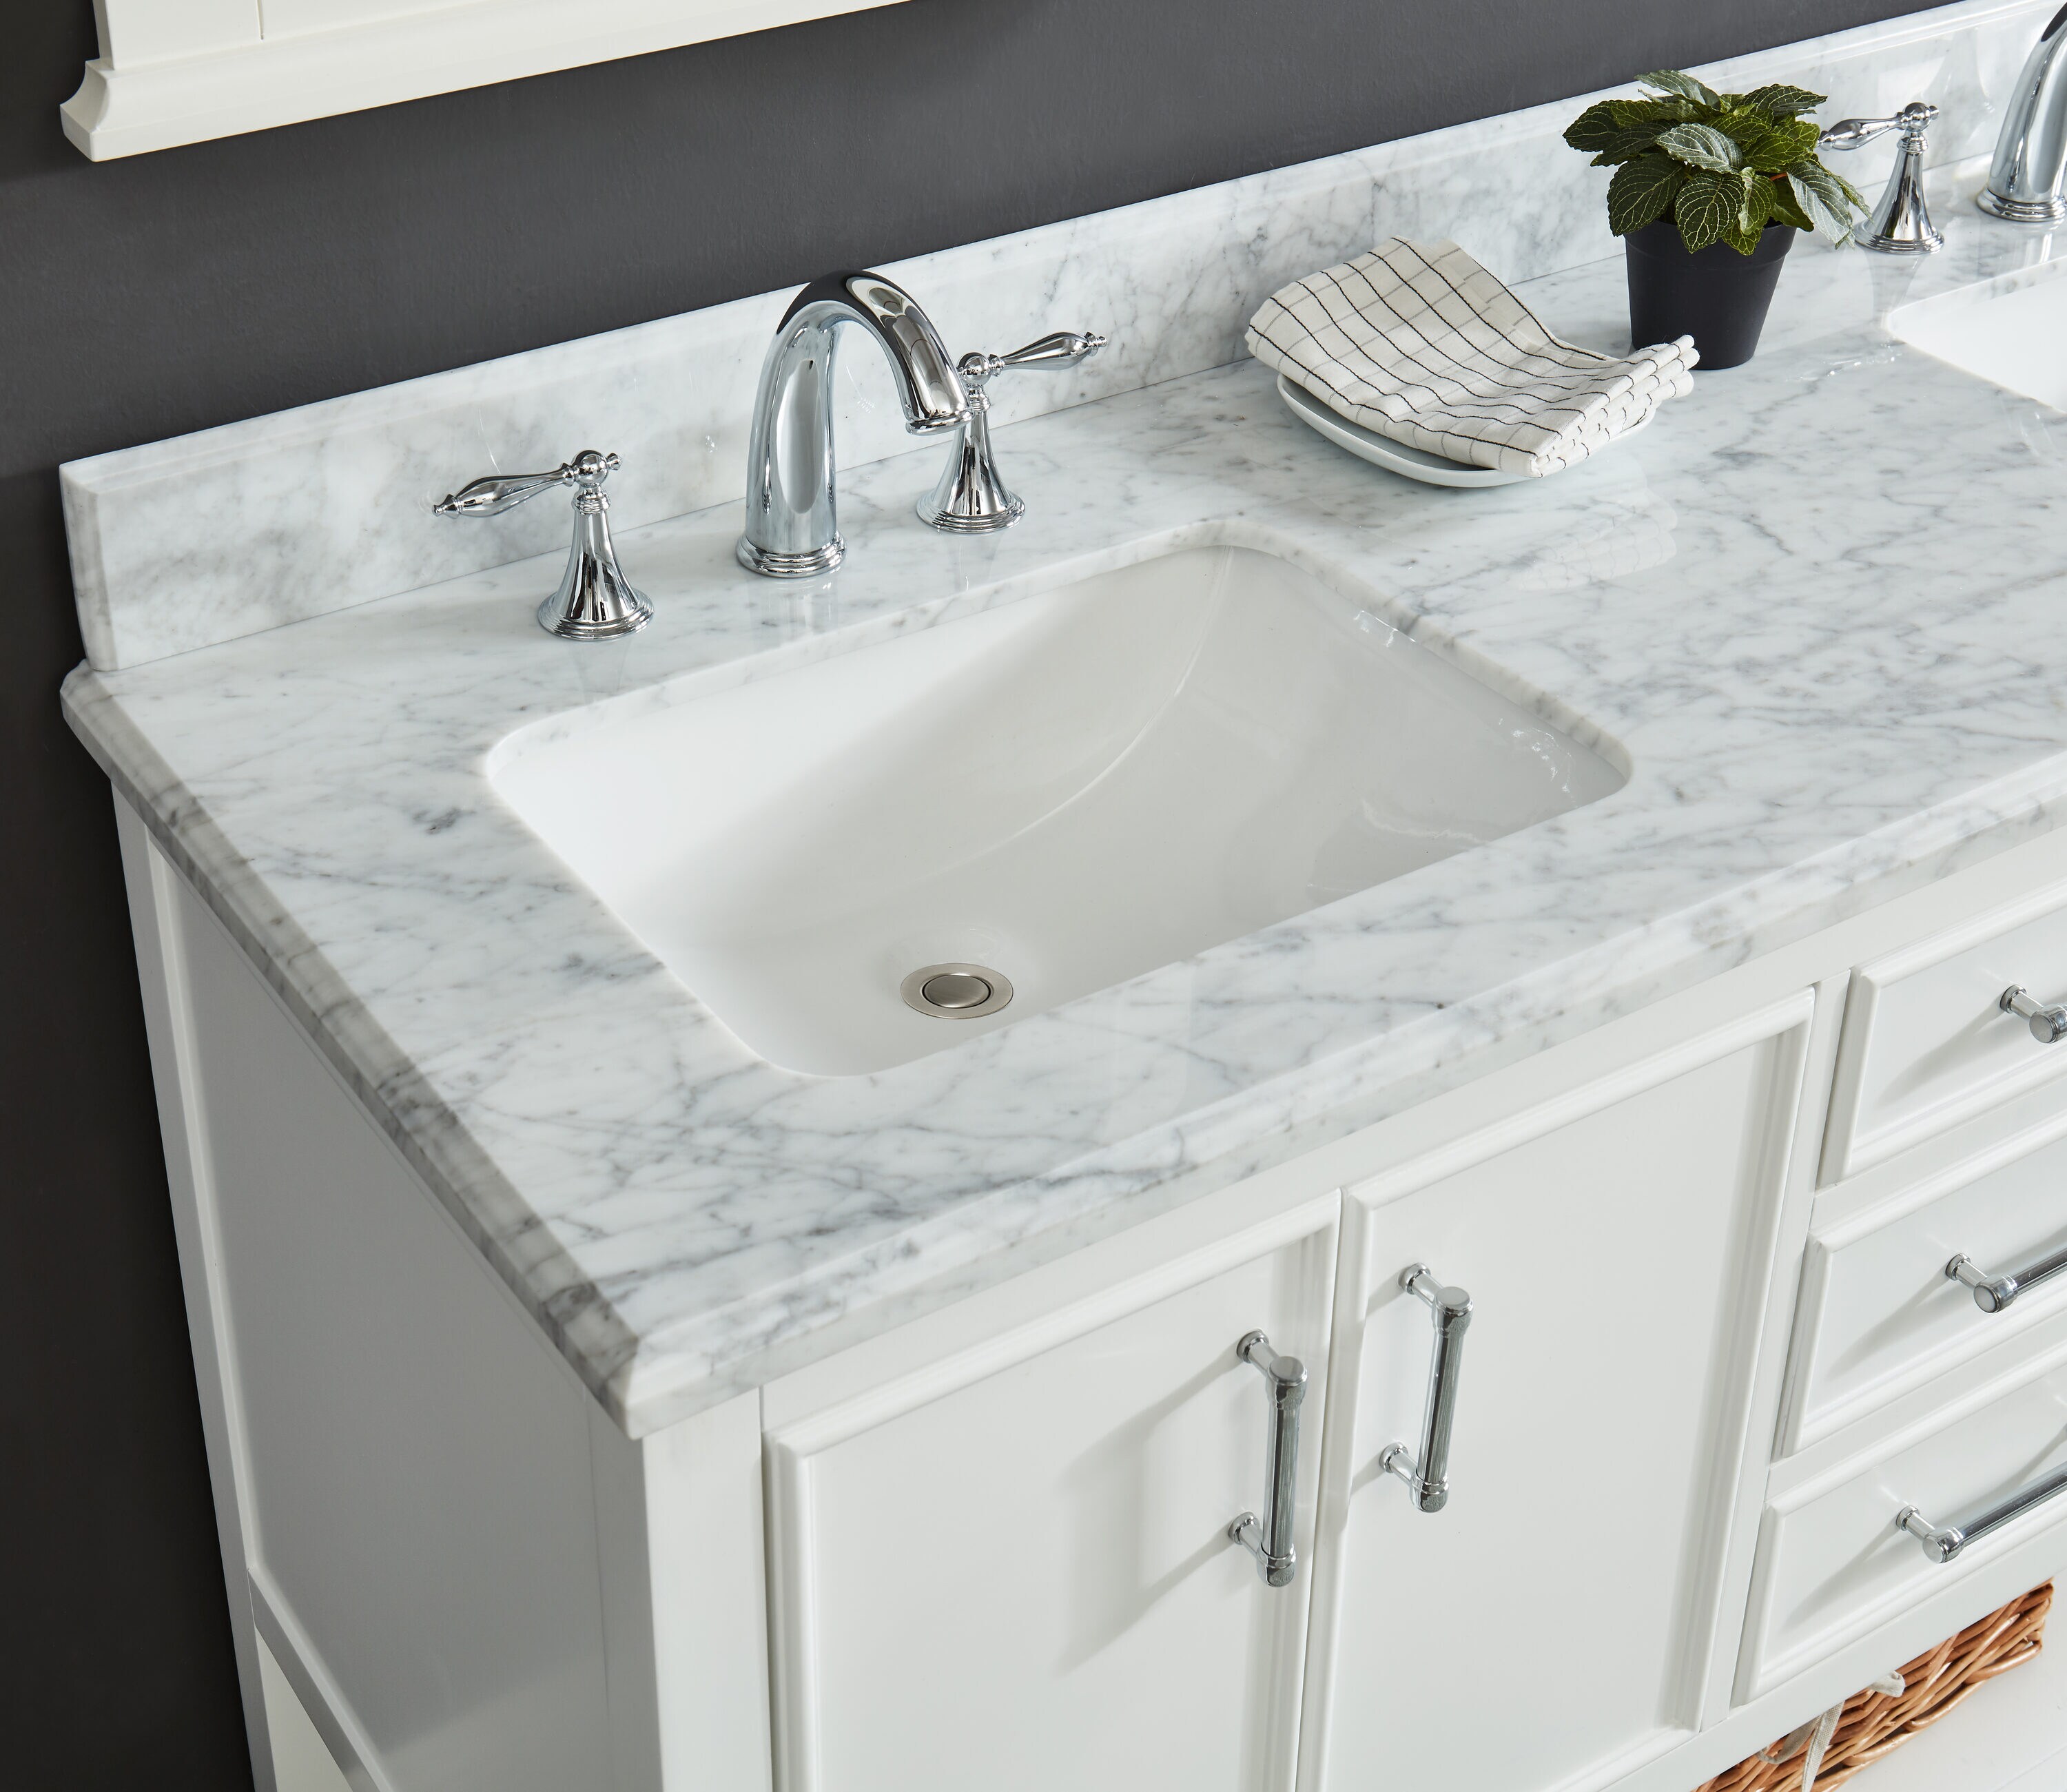 HoMedics Carrara Marble Digital Bathroom Scale - White 1 ct